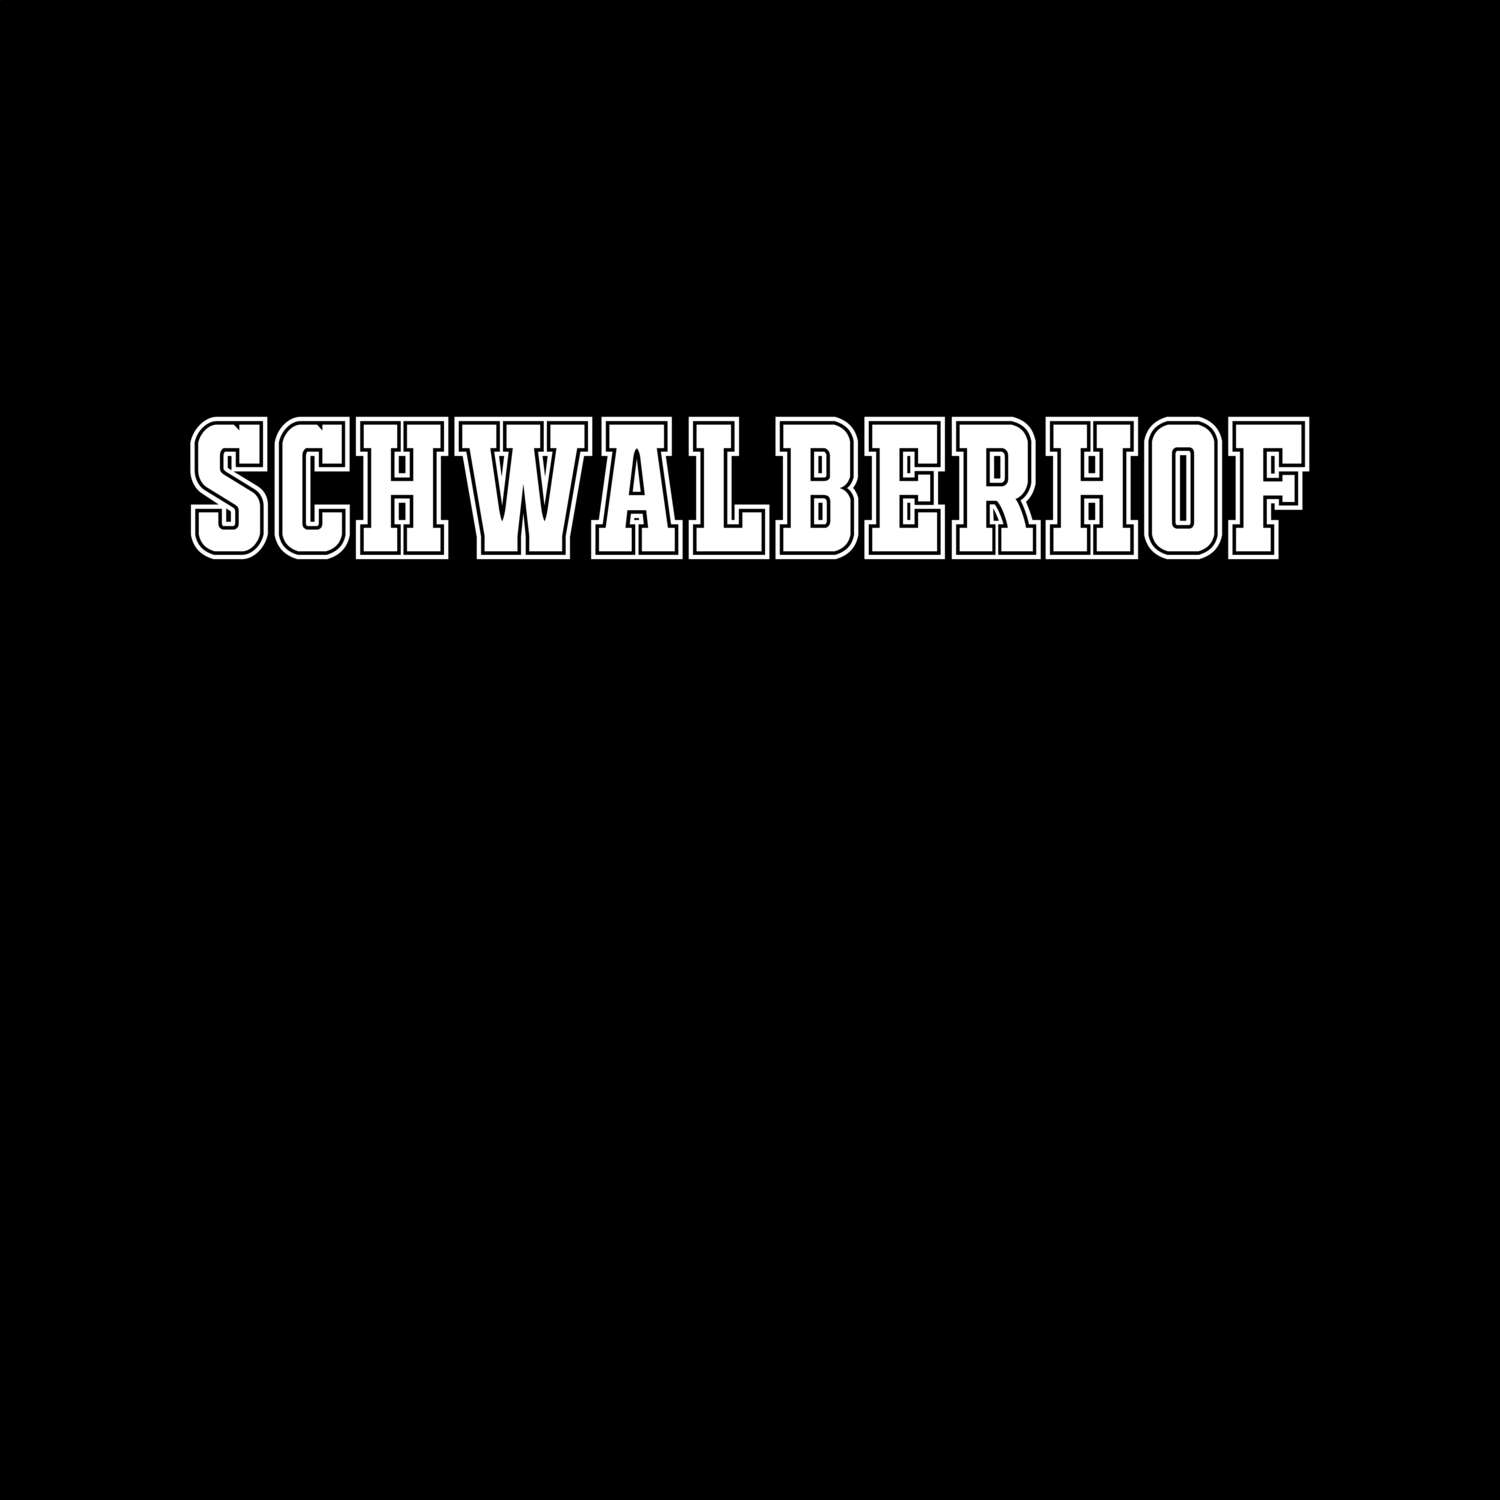 Schwalberhof T-Shirt »Classic«